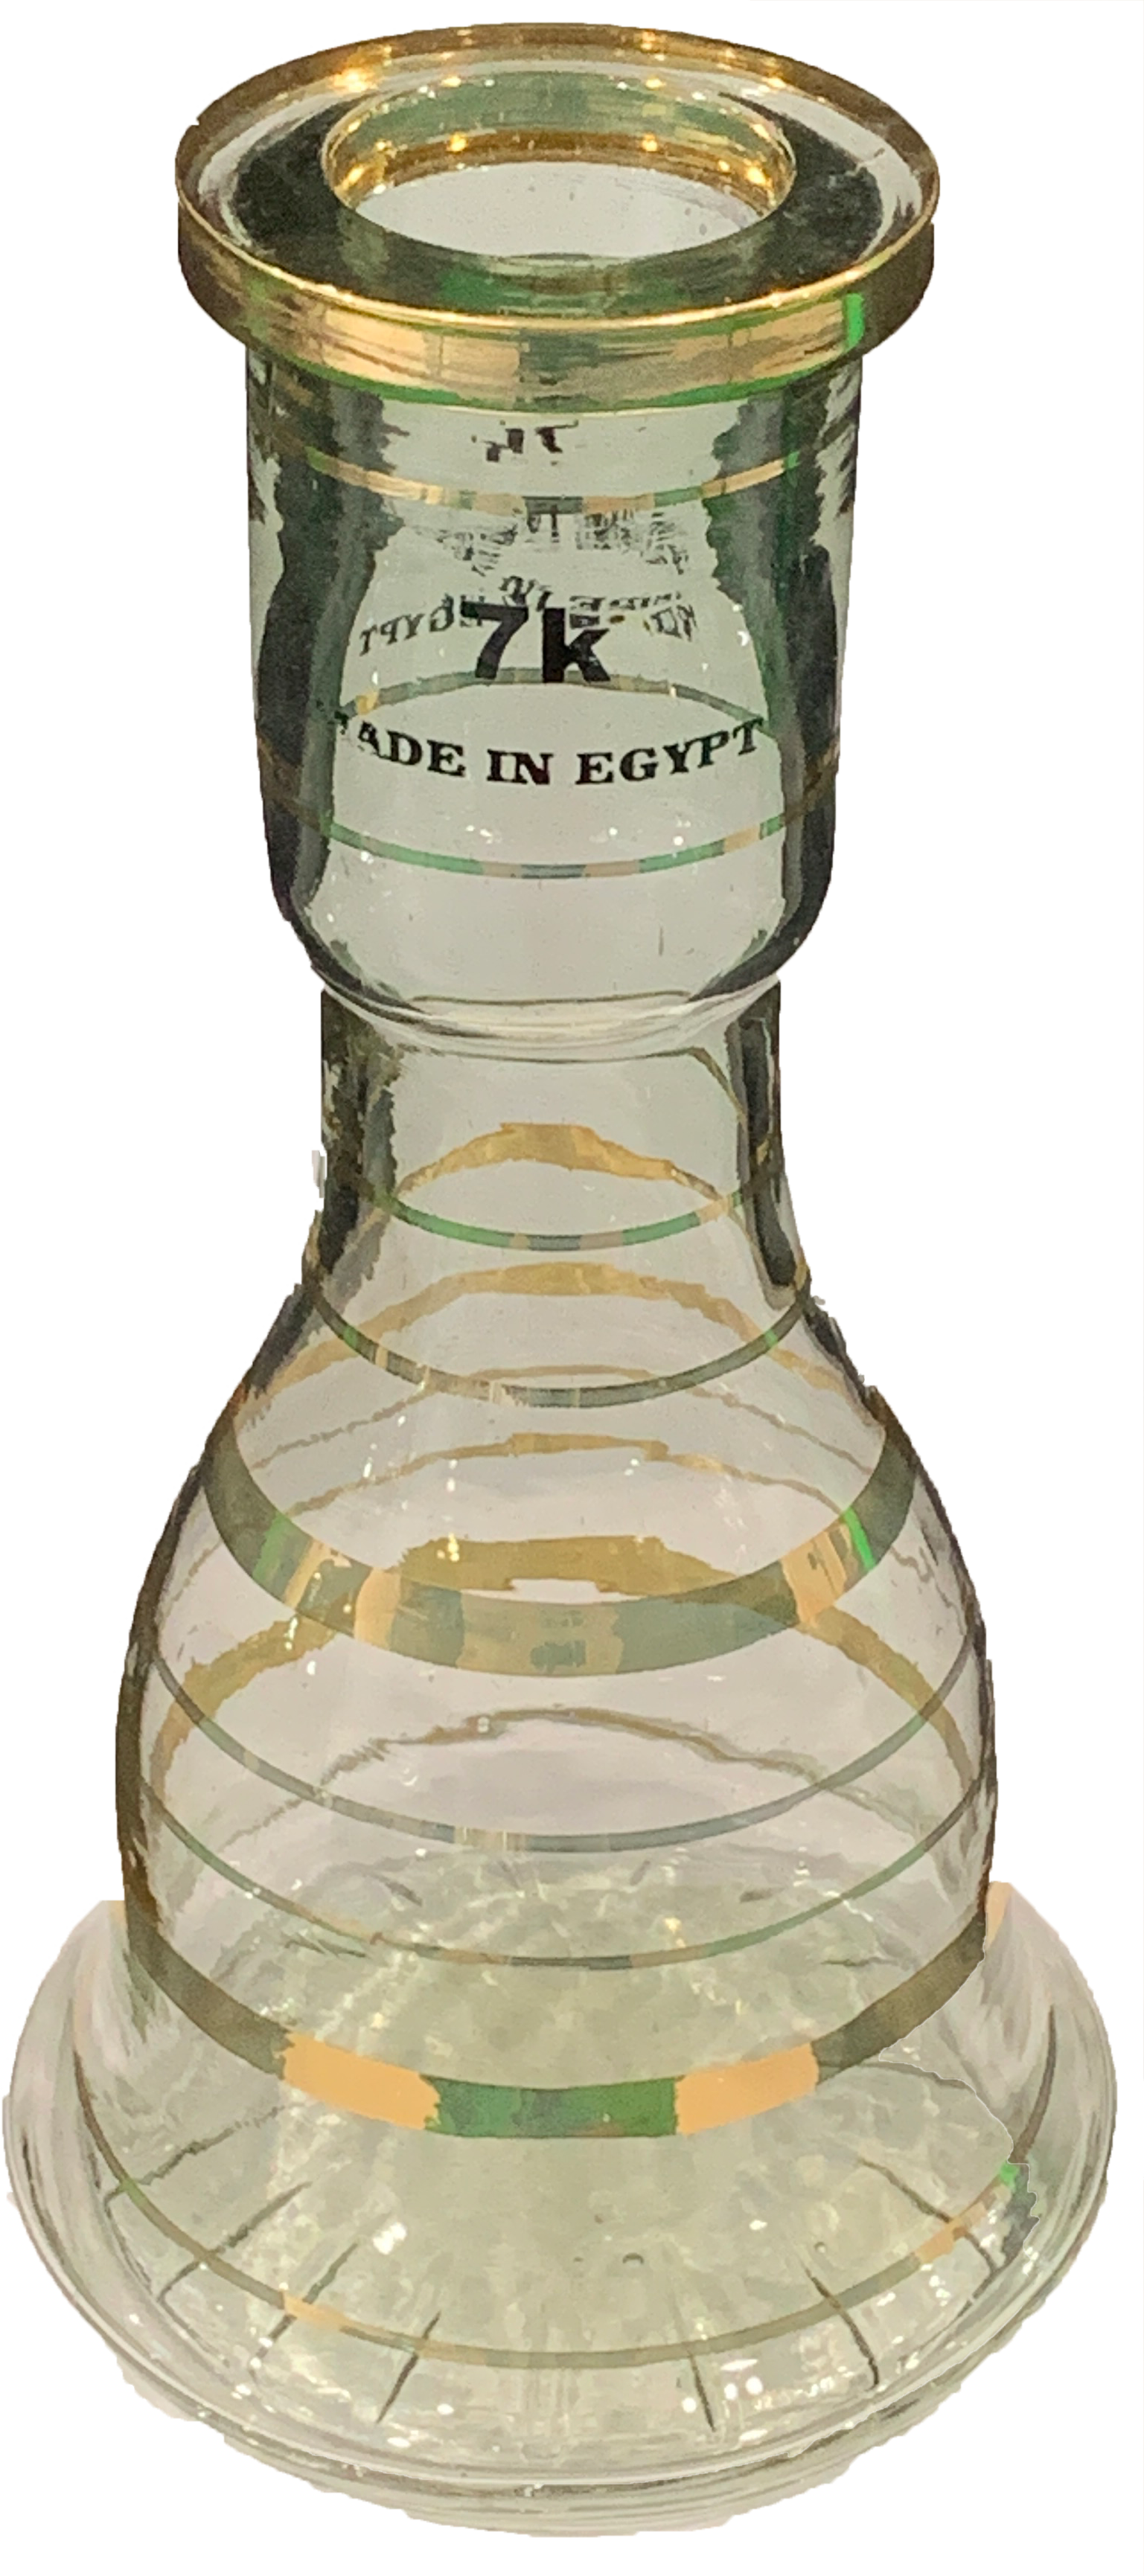 7k Safari Glass for Egyptian Hookahs